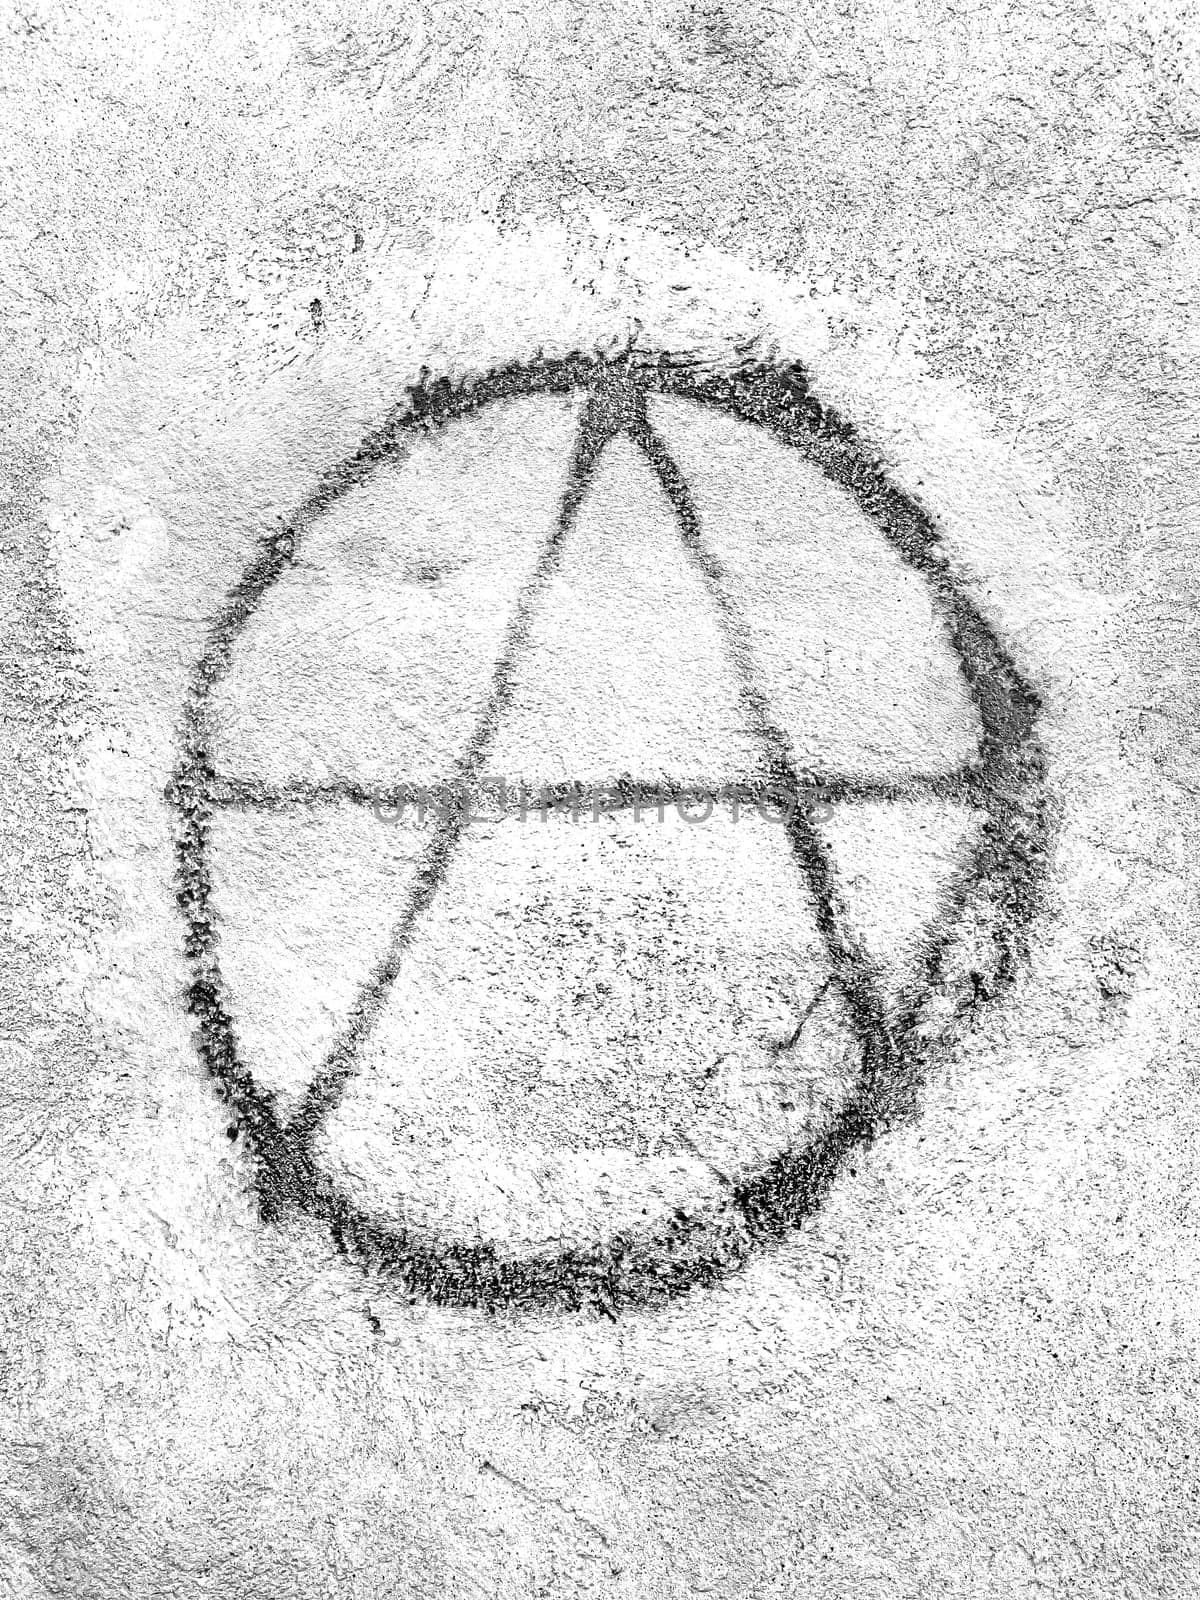 Symbol of anarchy by germanopoli